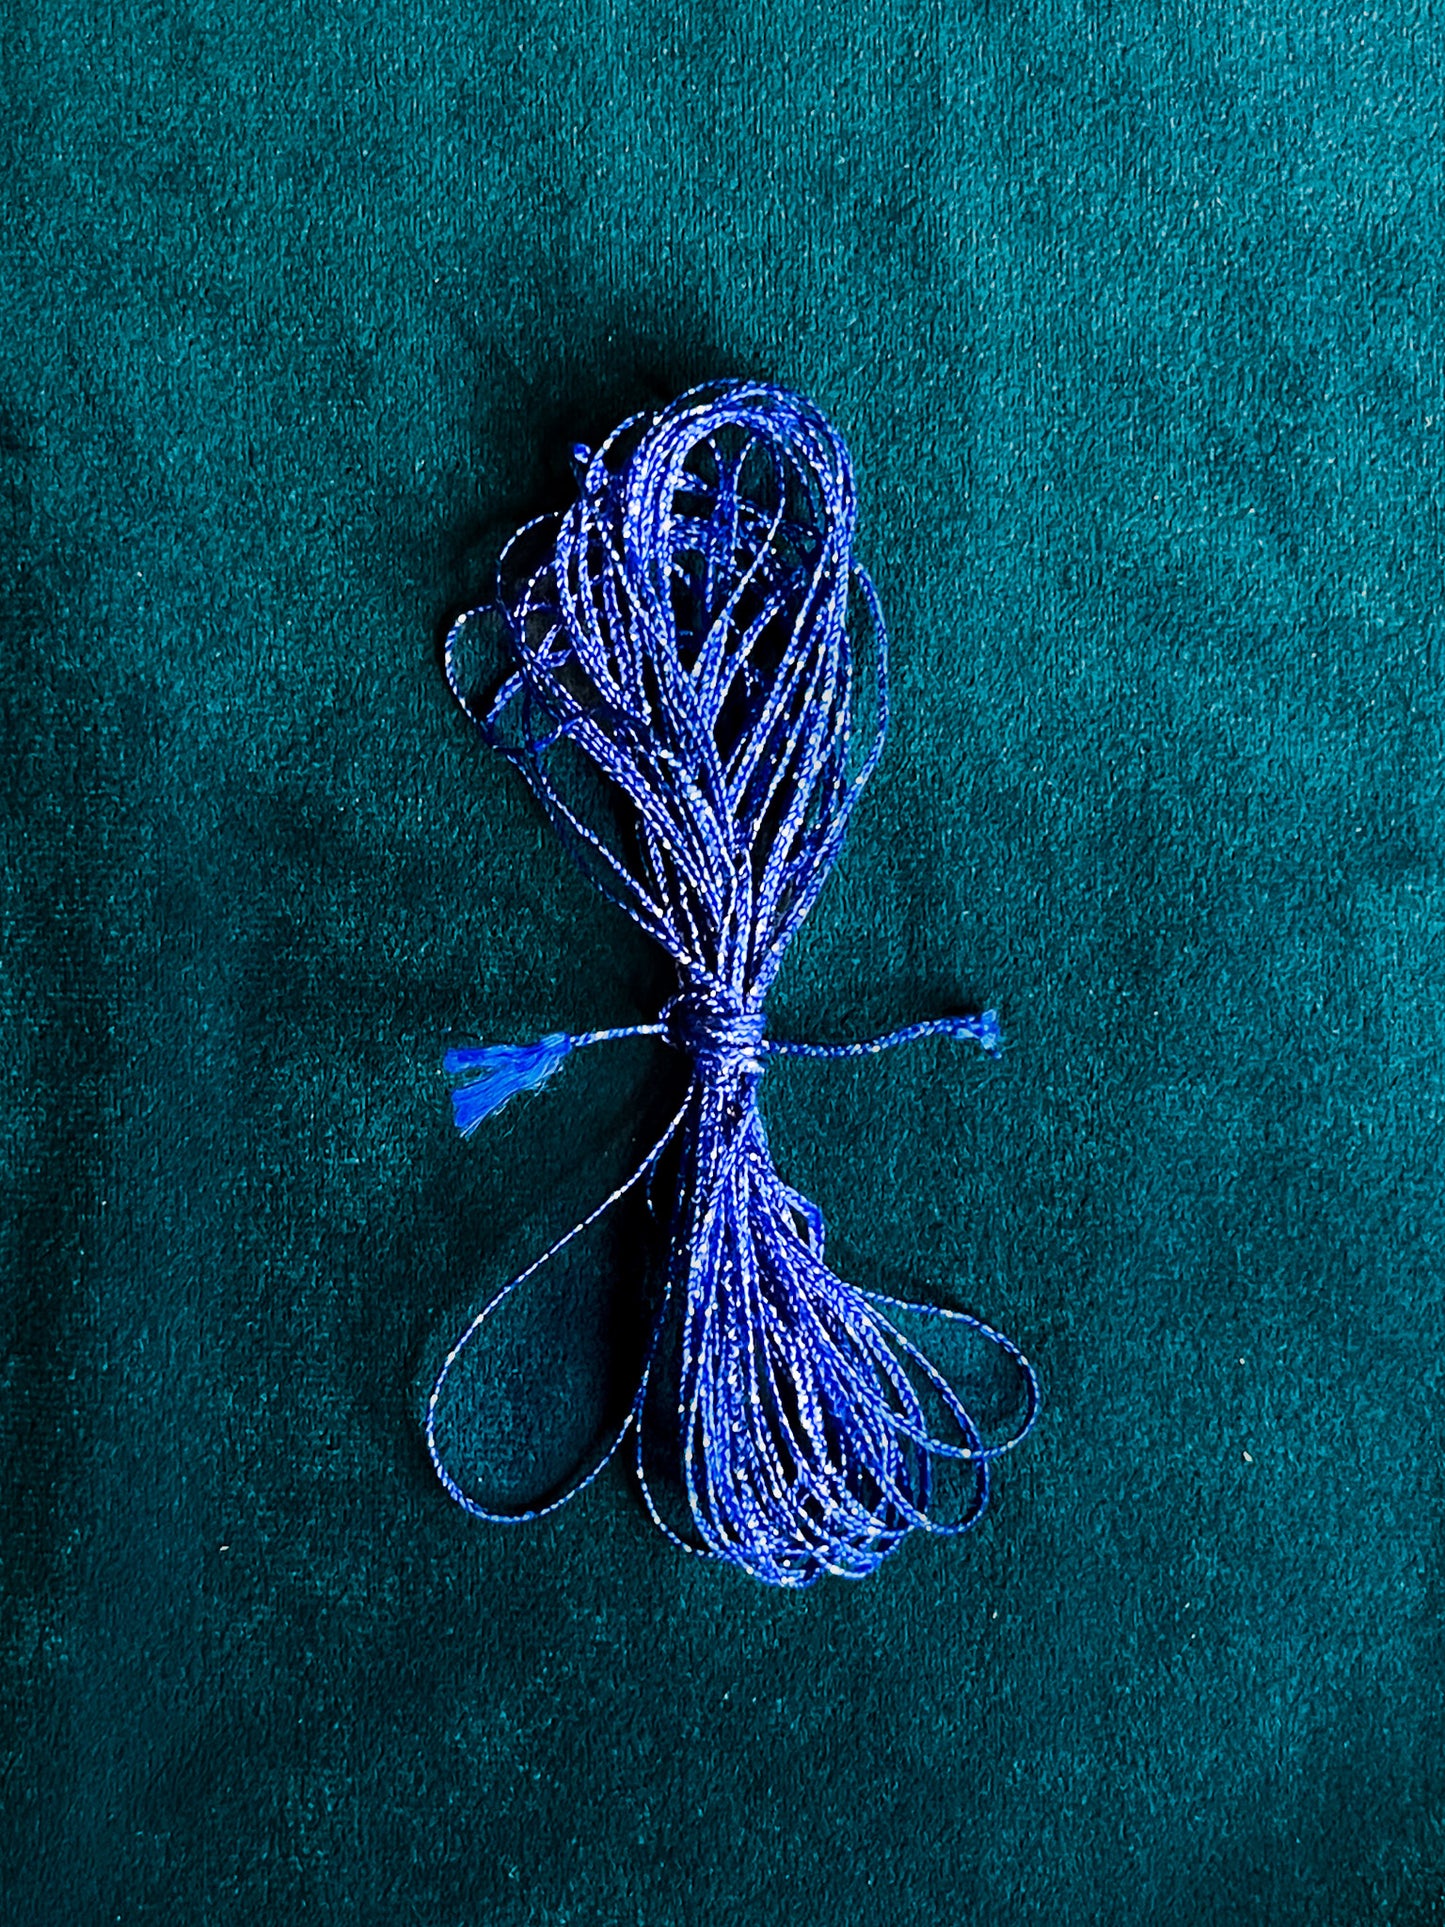 Blue Nylon Thread